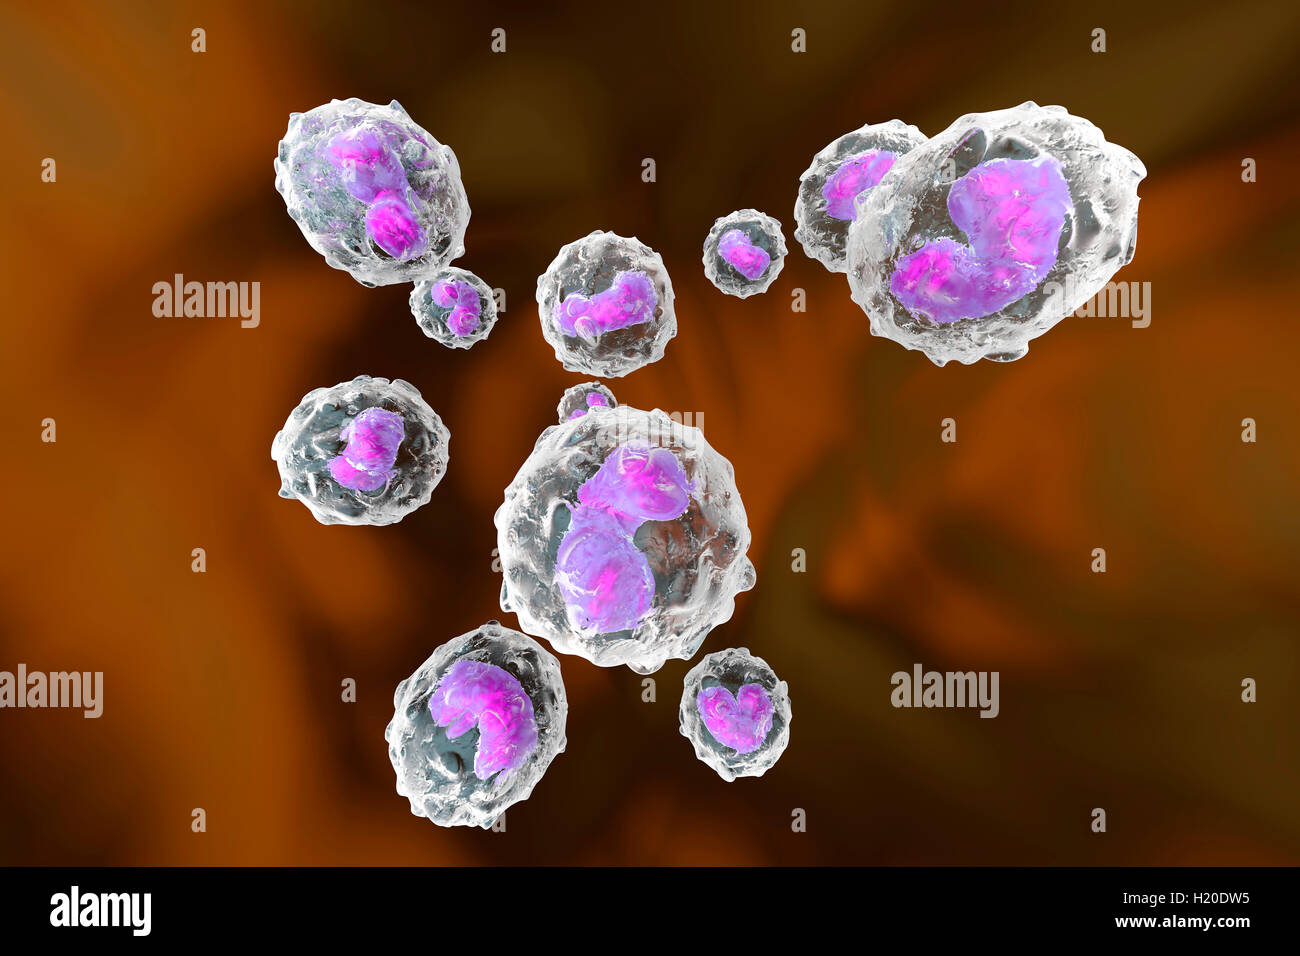 Monocytes, immune system, defense cells, 3D rendered illustration Stock Photo